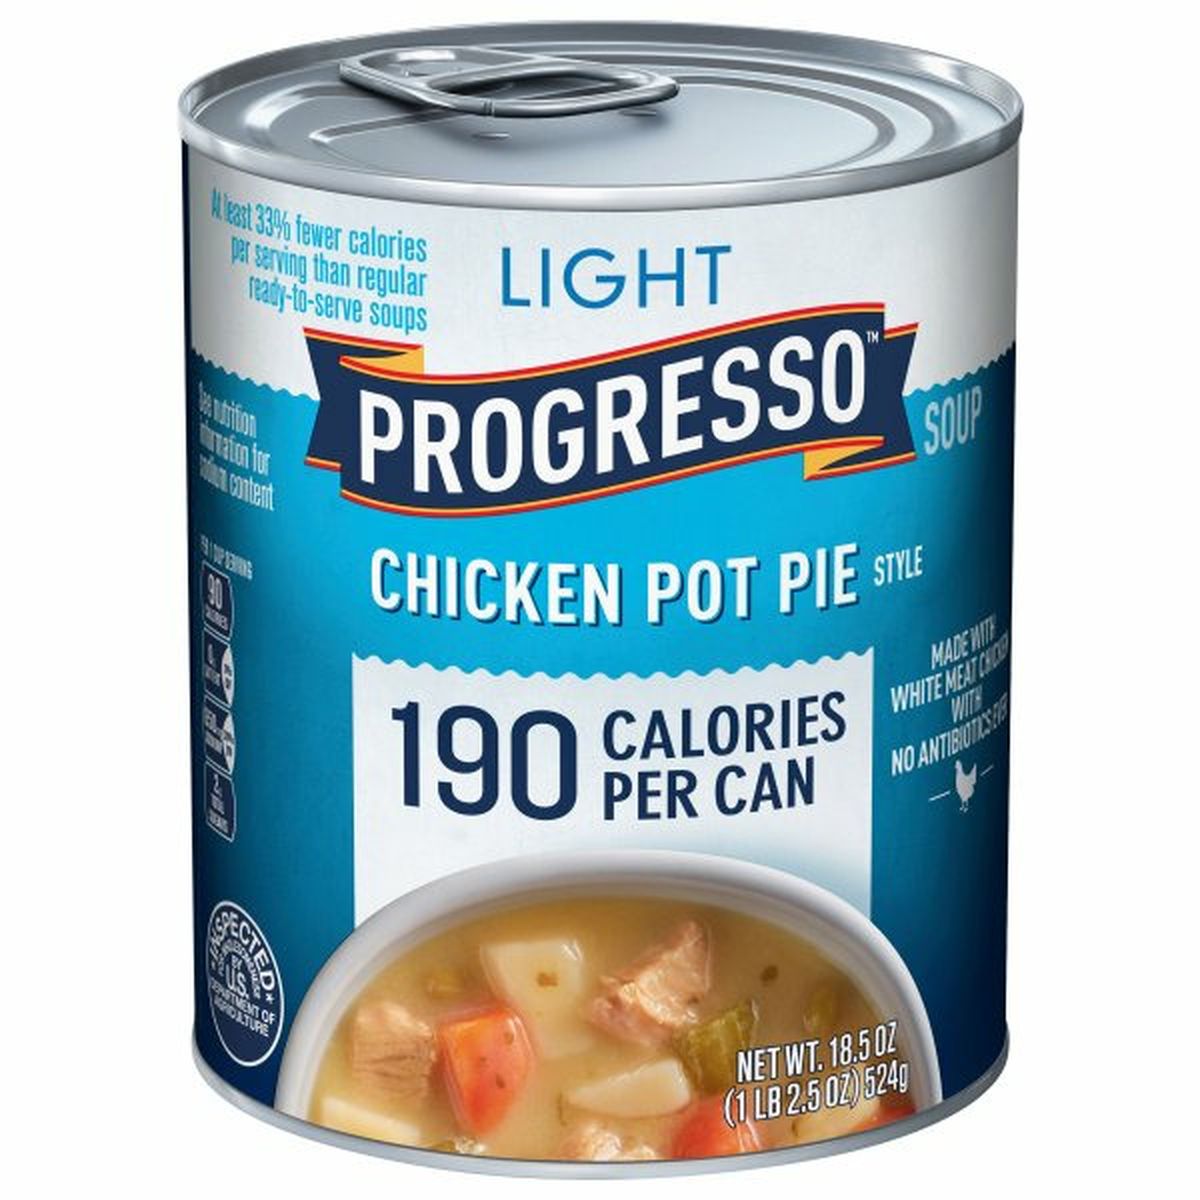 Calories in Progresso Soup, Chicken Pot Pie Style, Light